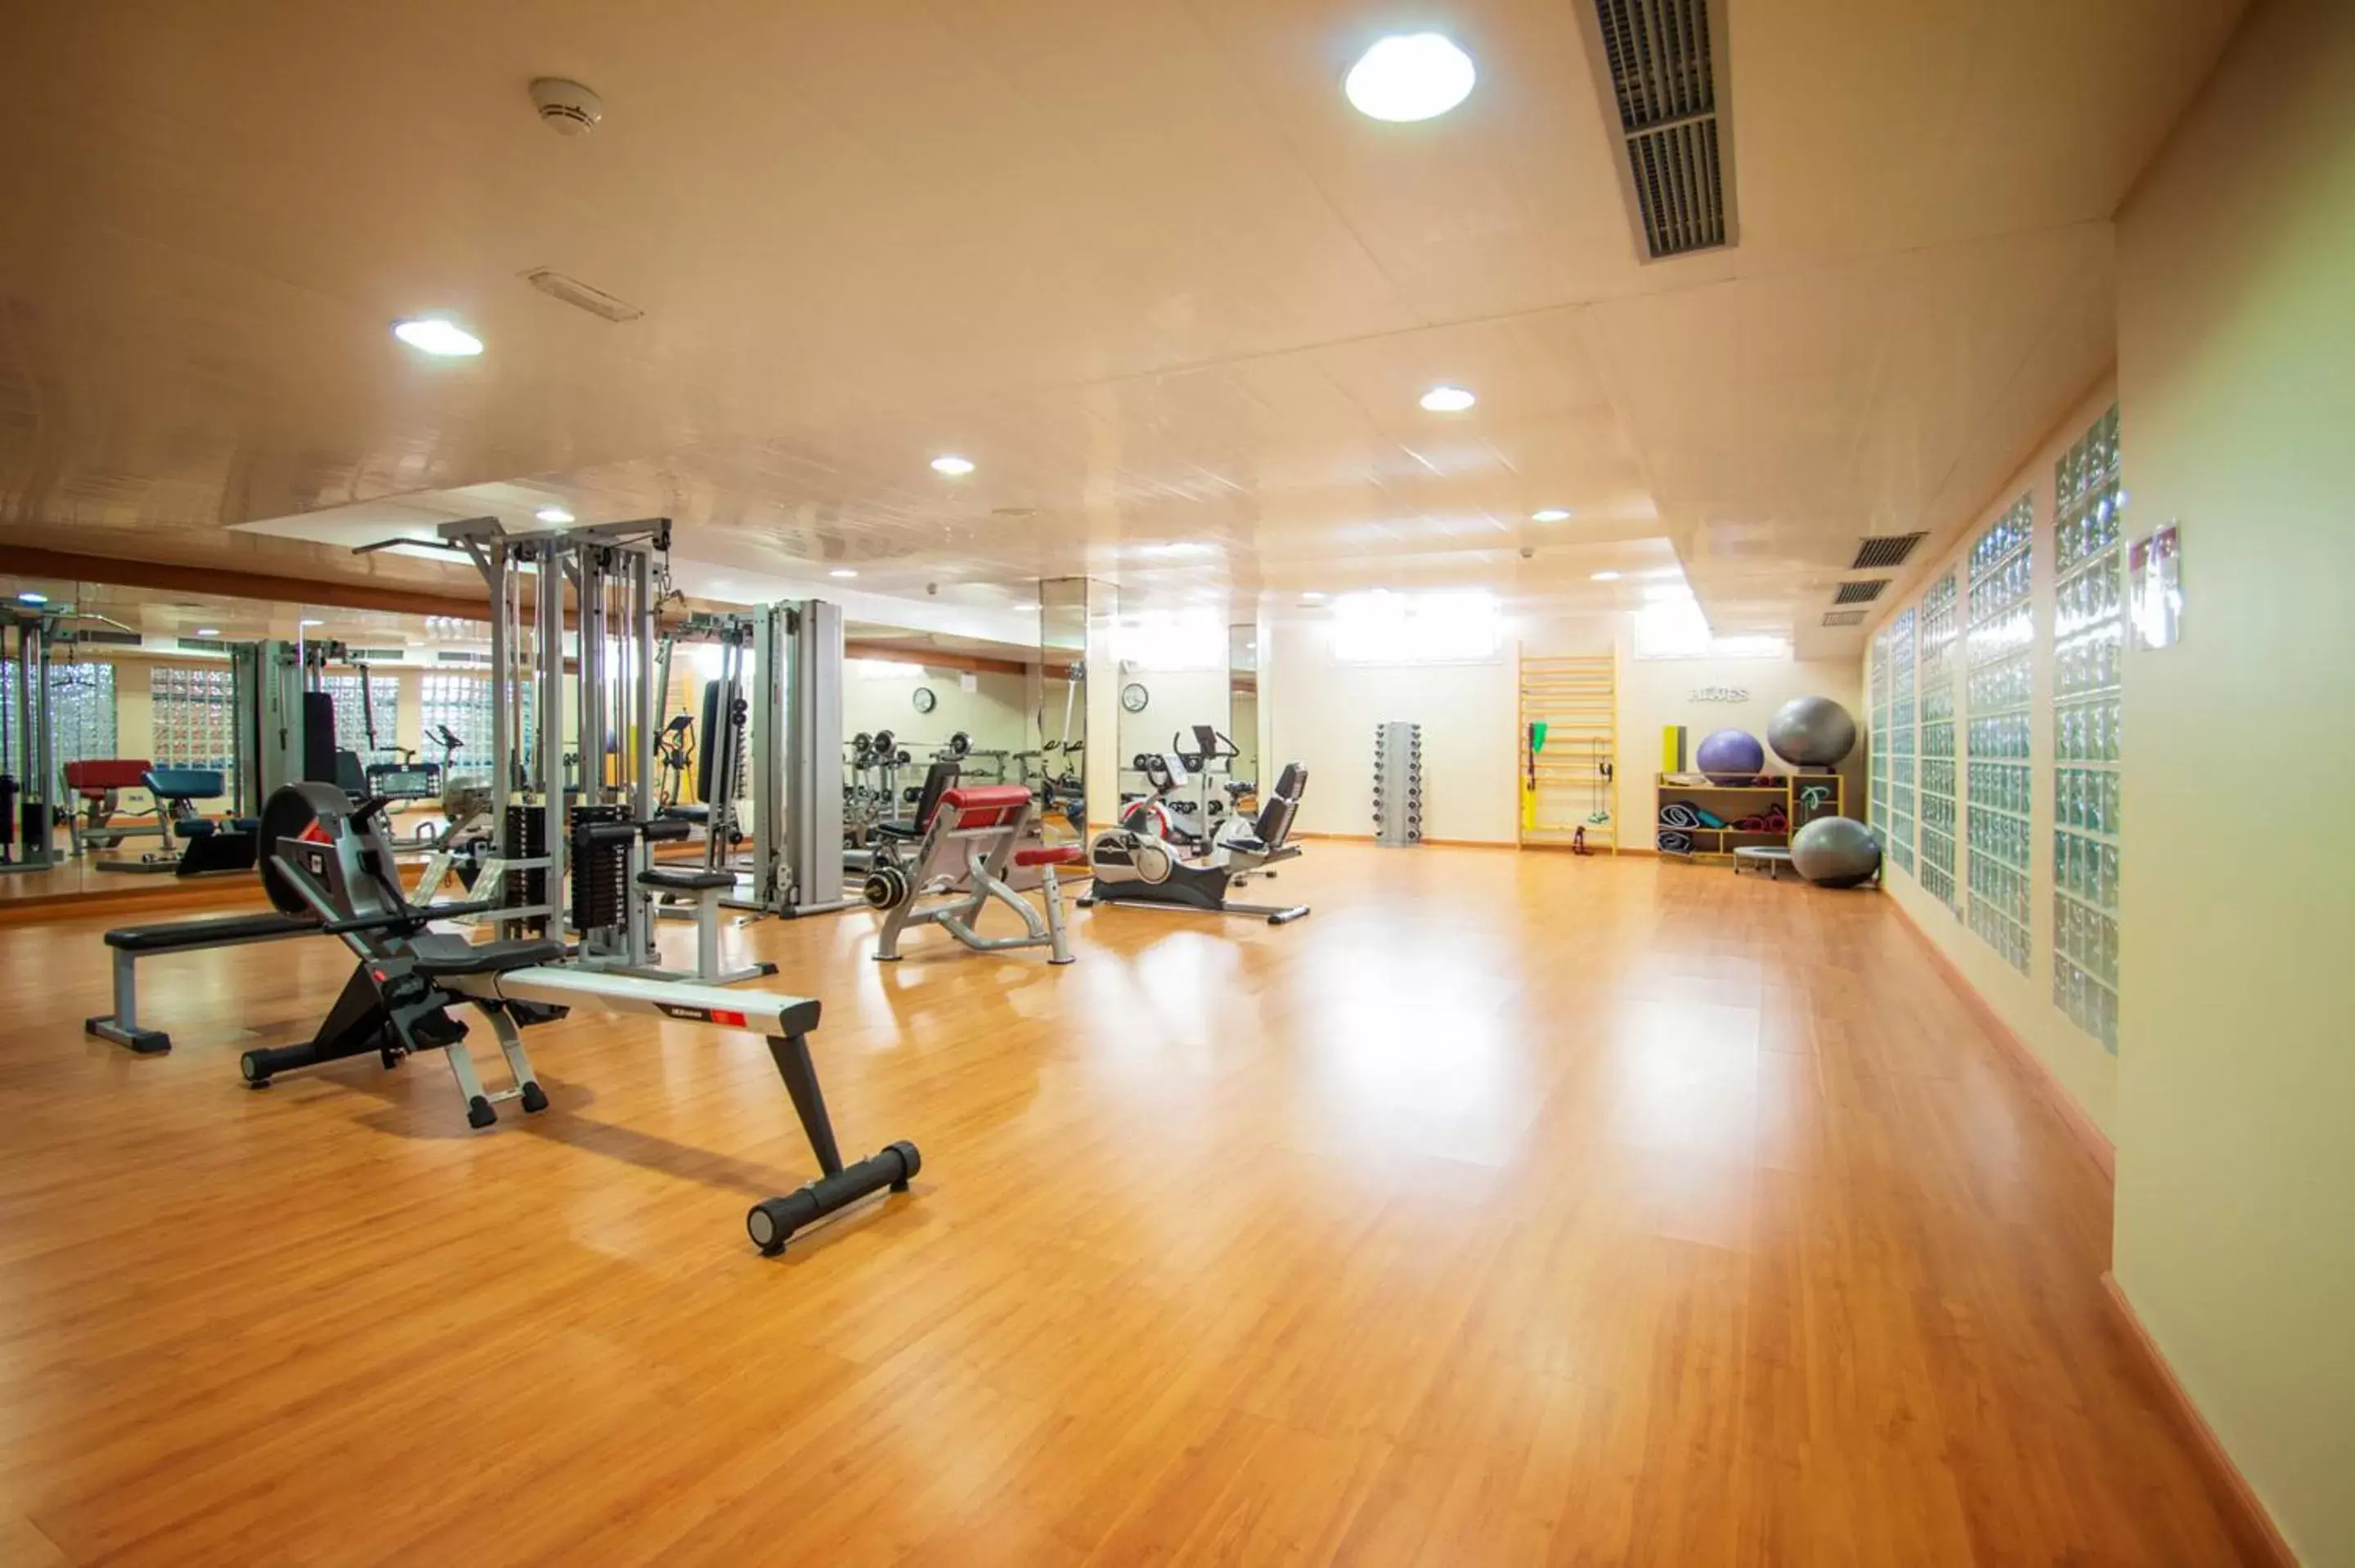 Fitness centre/facilities, Fitness Center/Facilities in Servigroup Marina Playa